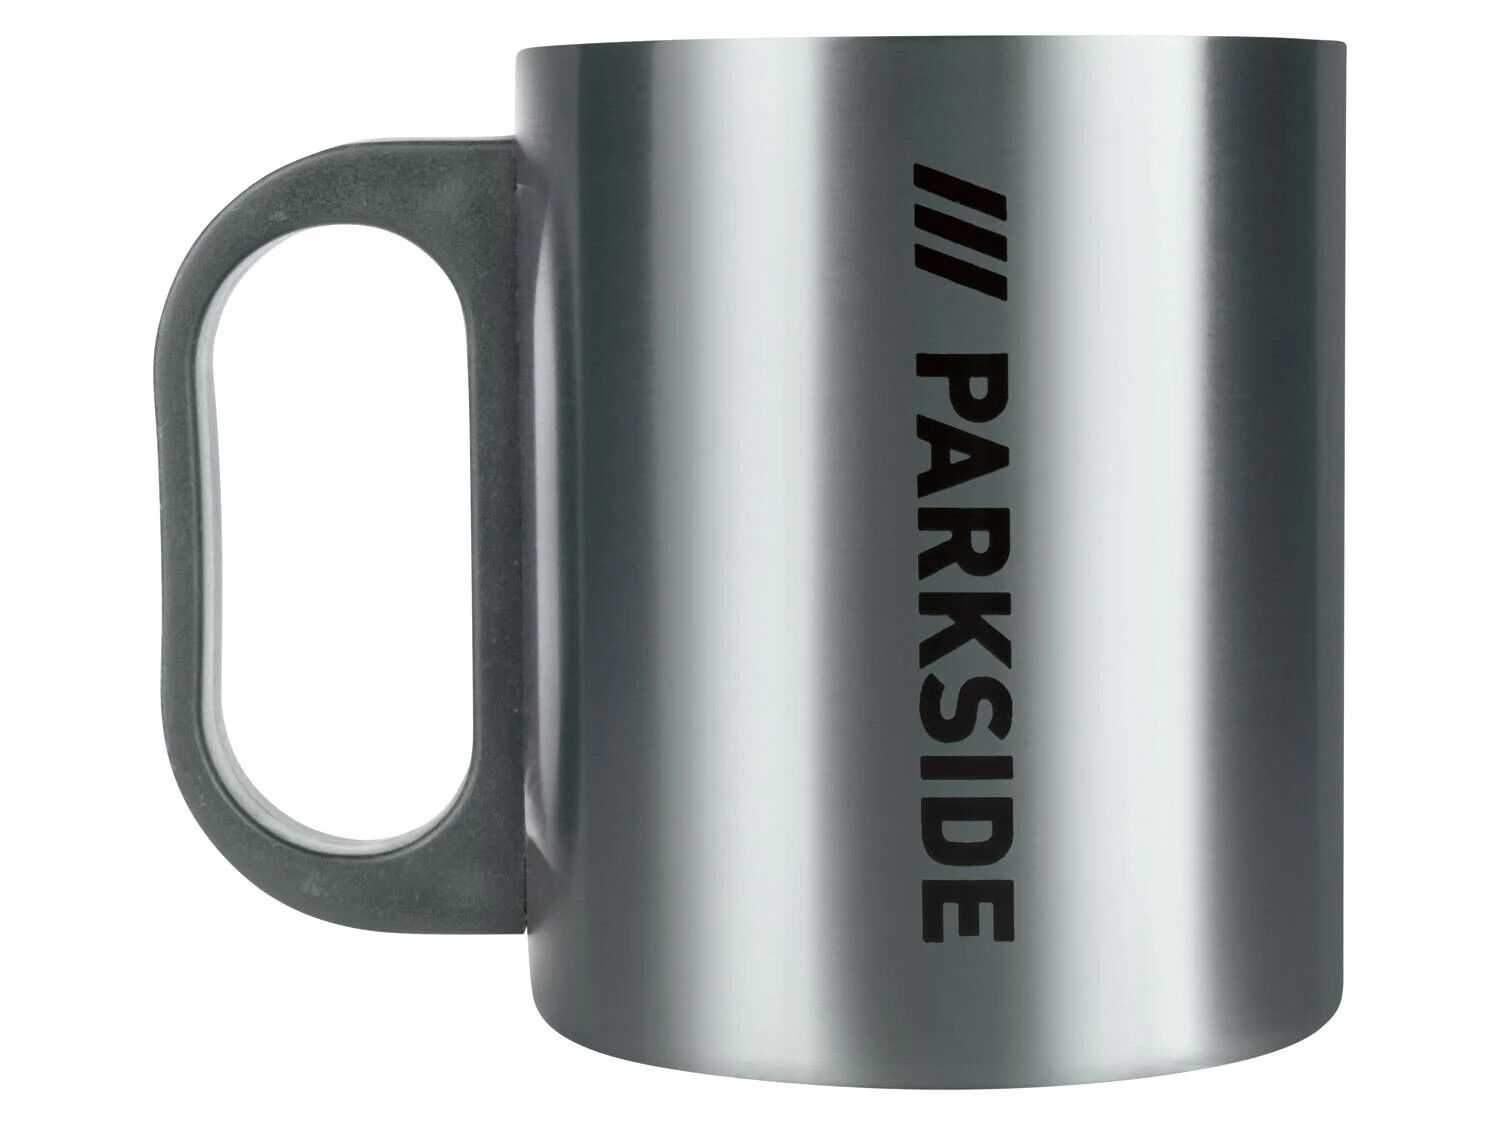 PARKSIDE ® 20V Cordless Coffee Machine - PKMA 20 Li A1 - About 240 Ml / Cup